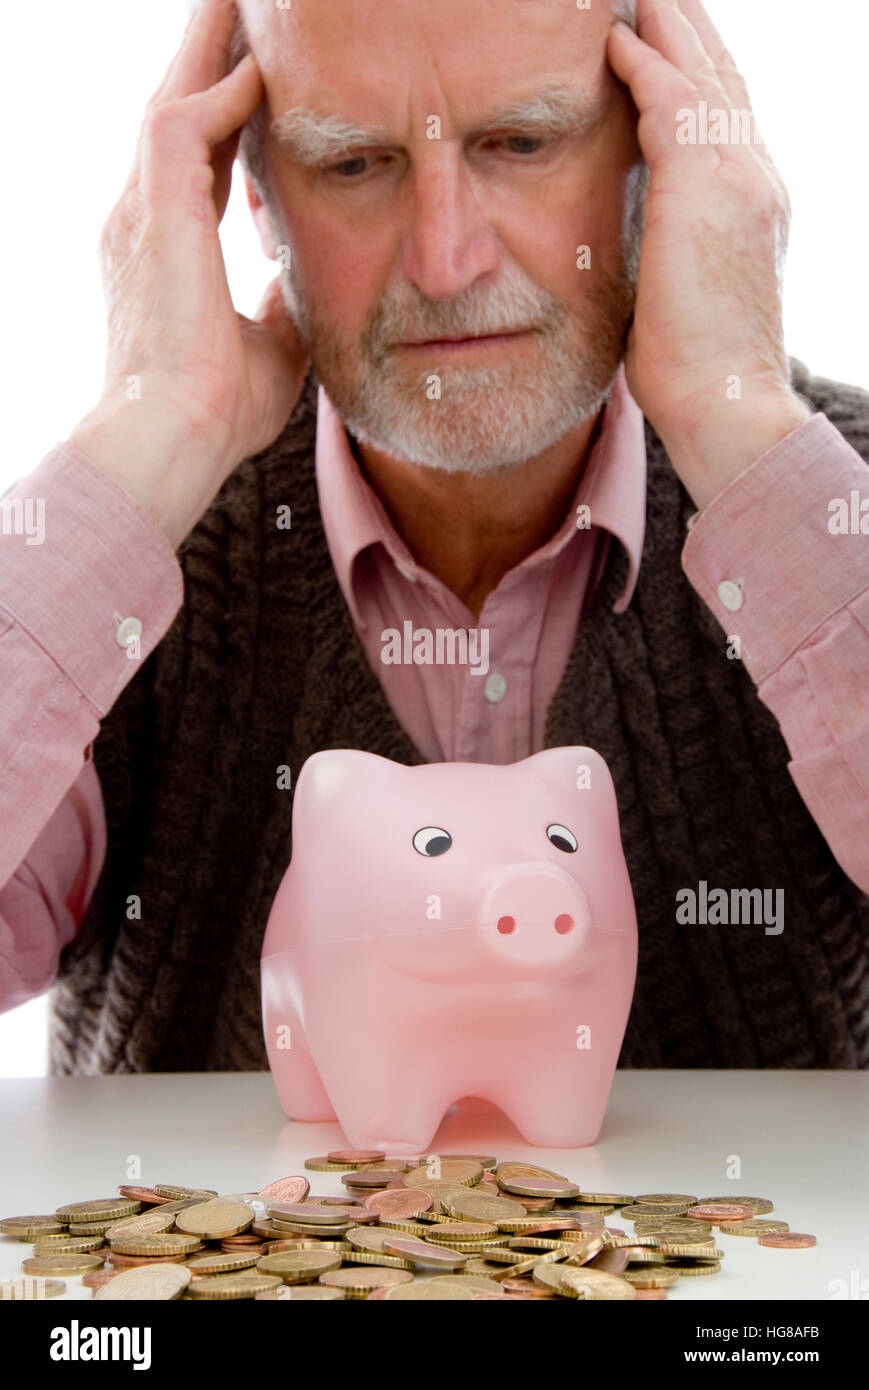 Retiree with money troubles Stock Photo